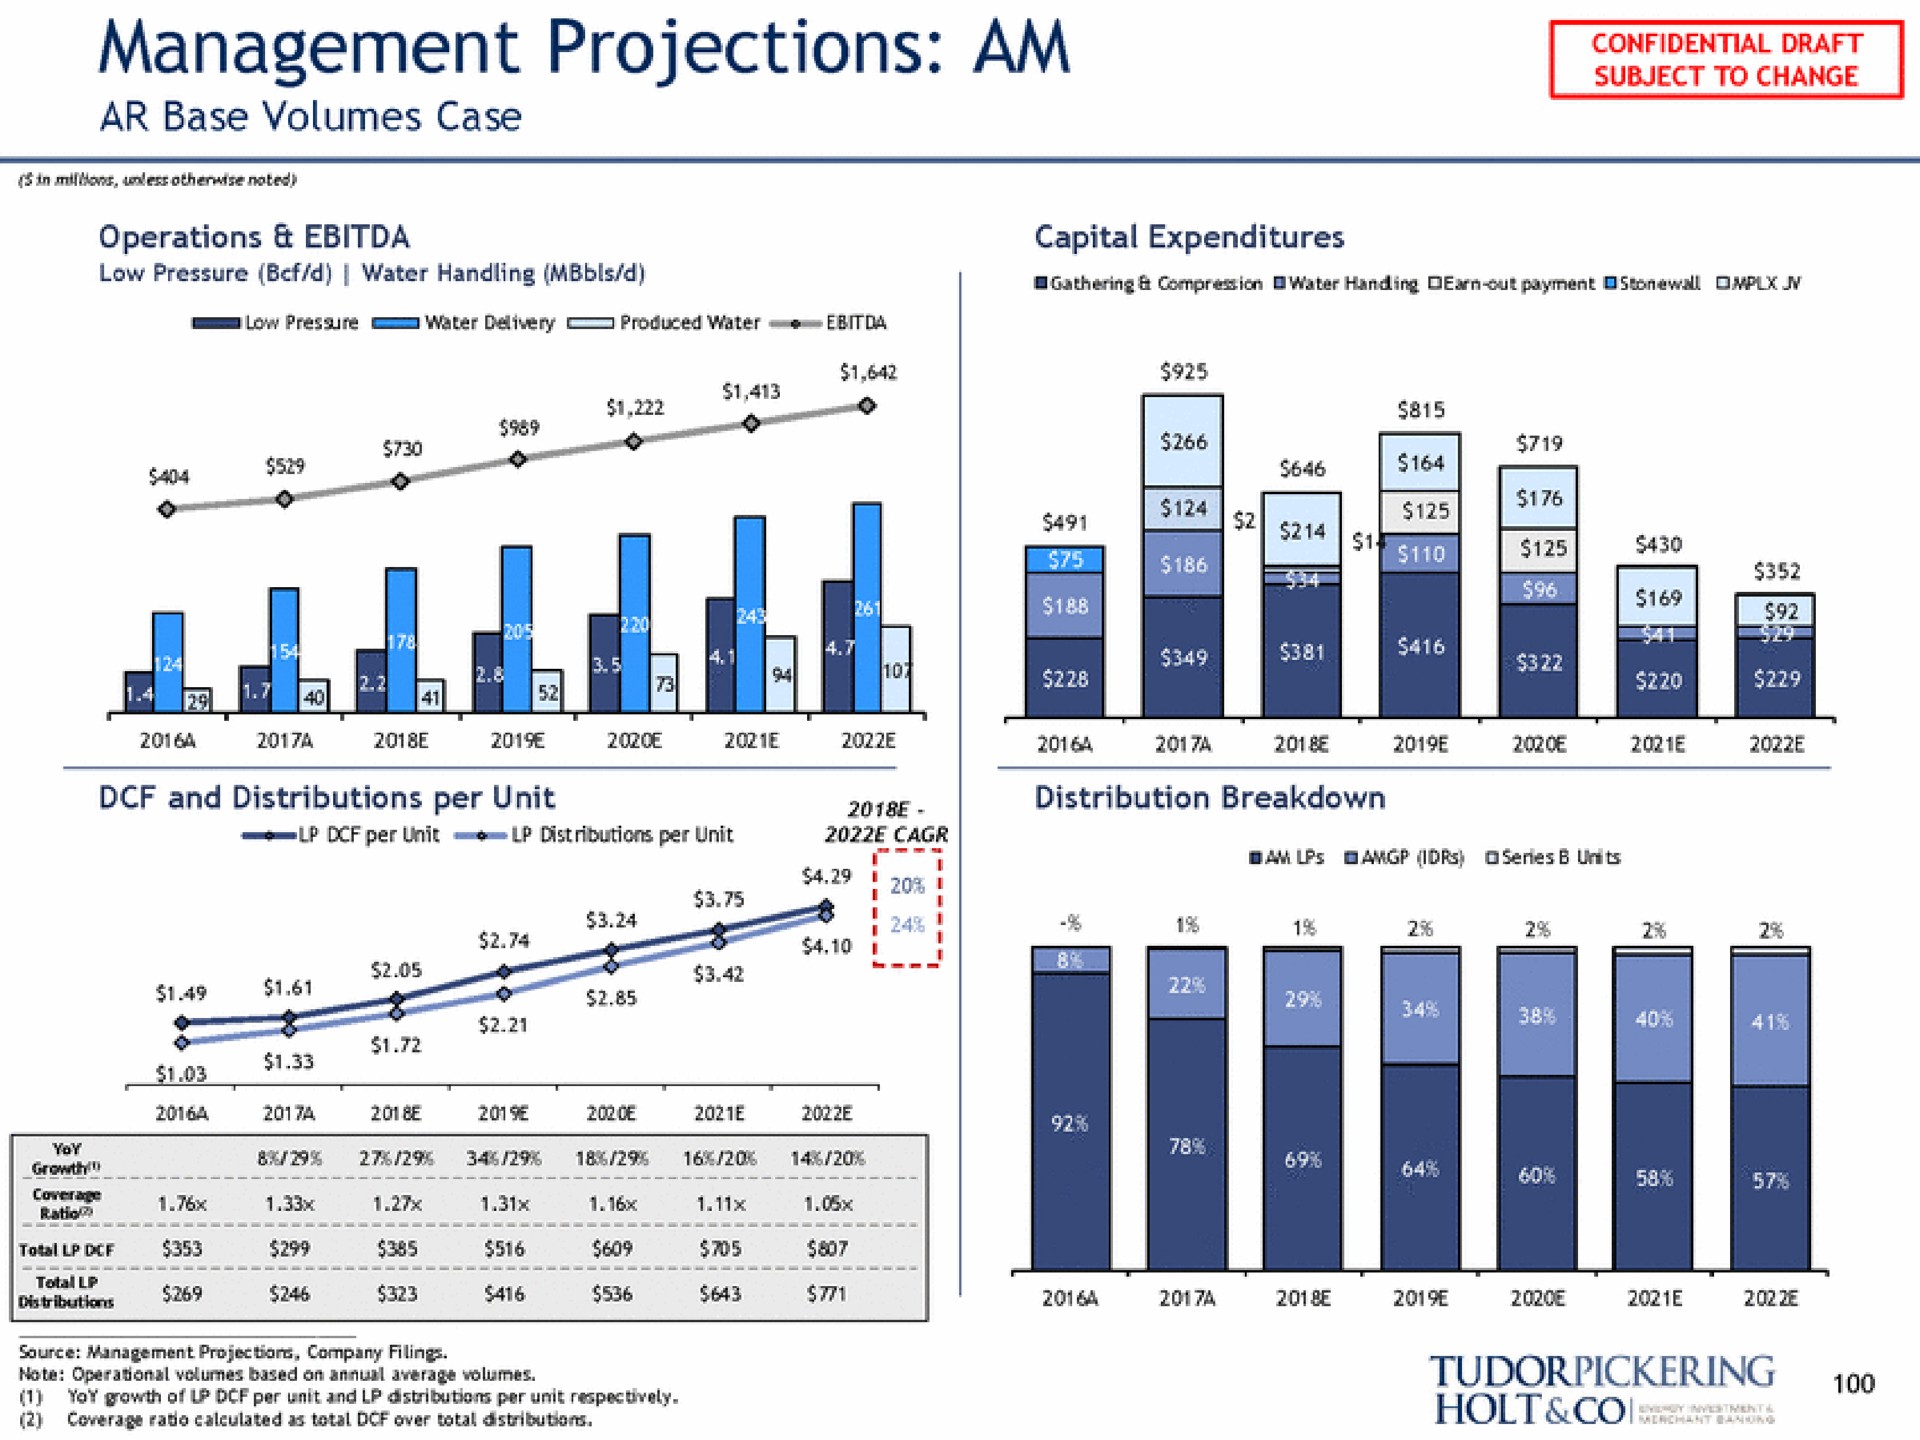 management projections am ring holt | Tudor, Pickering, Holt & Co